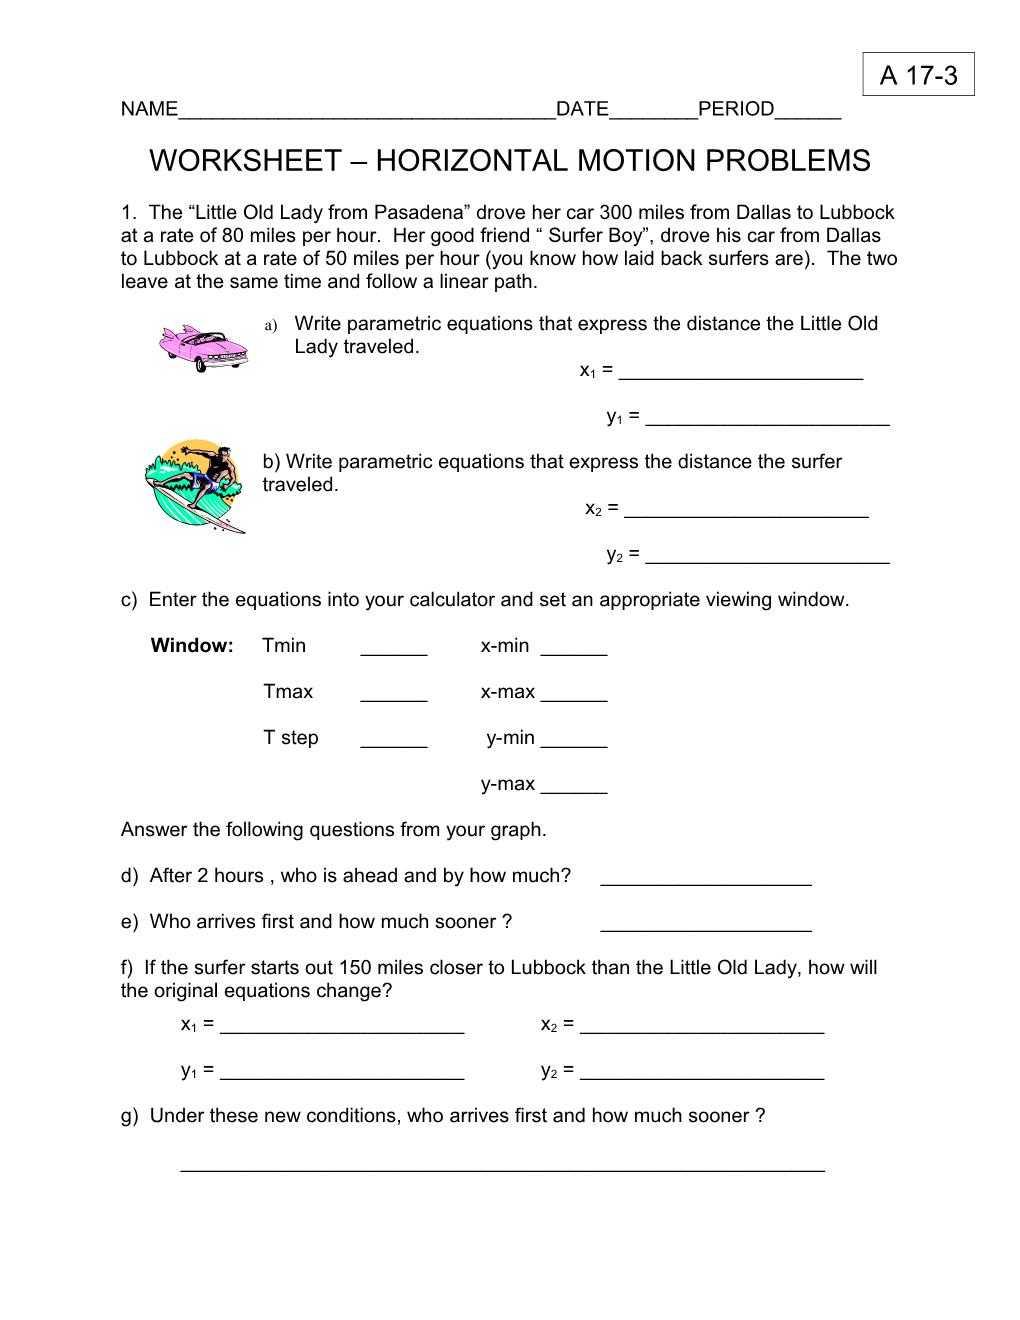 Worksheet Horizontal Motion Problems